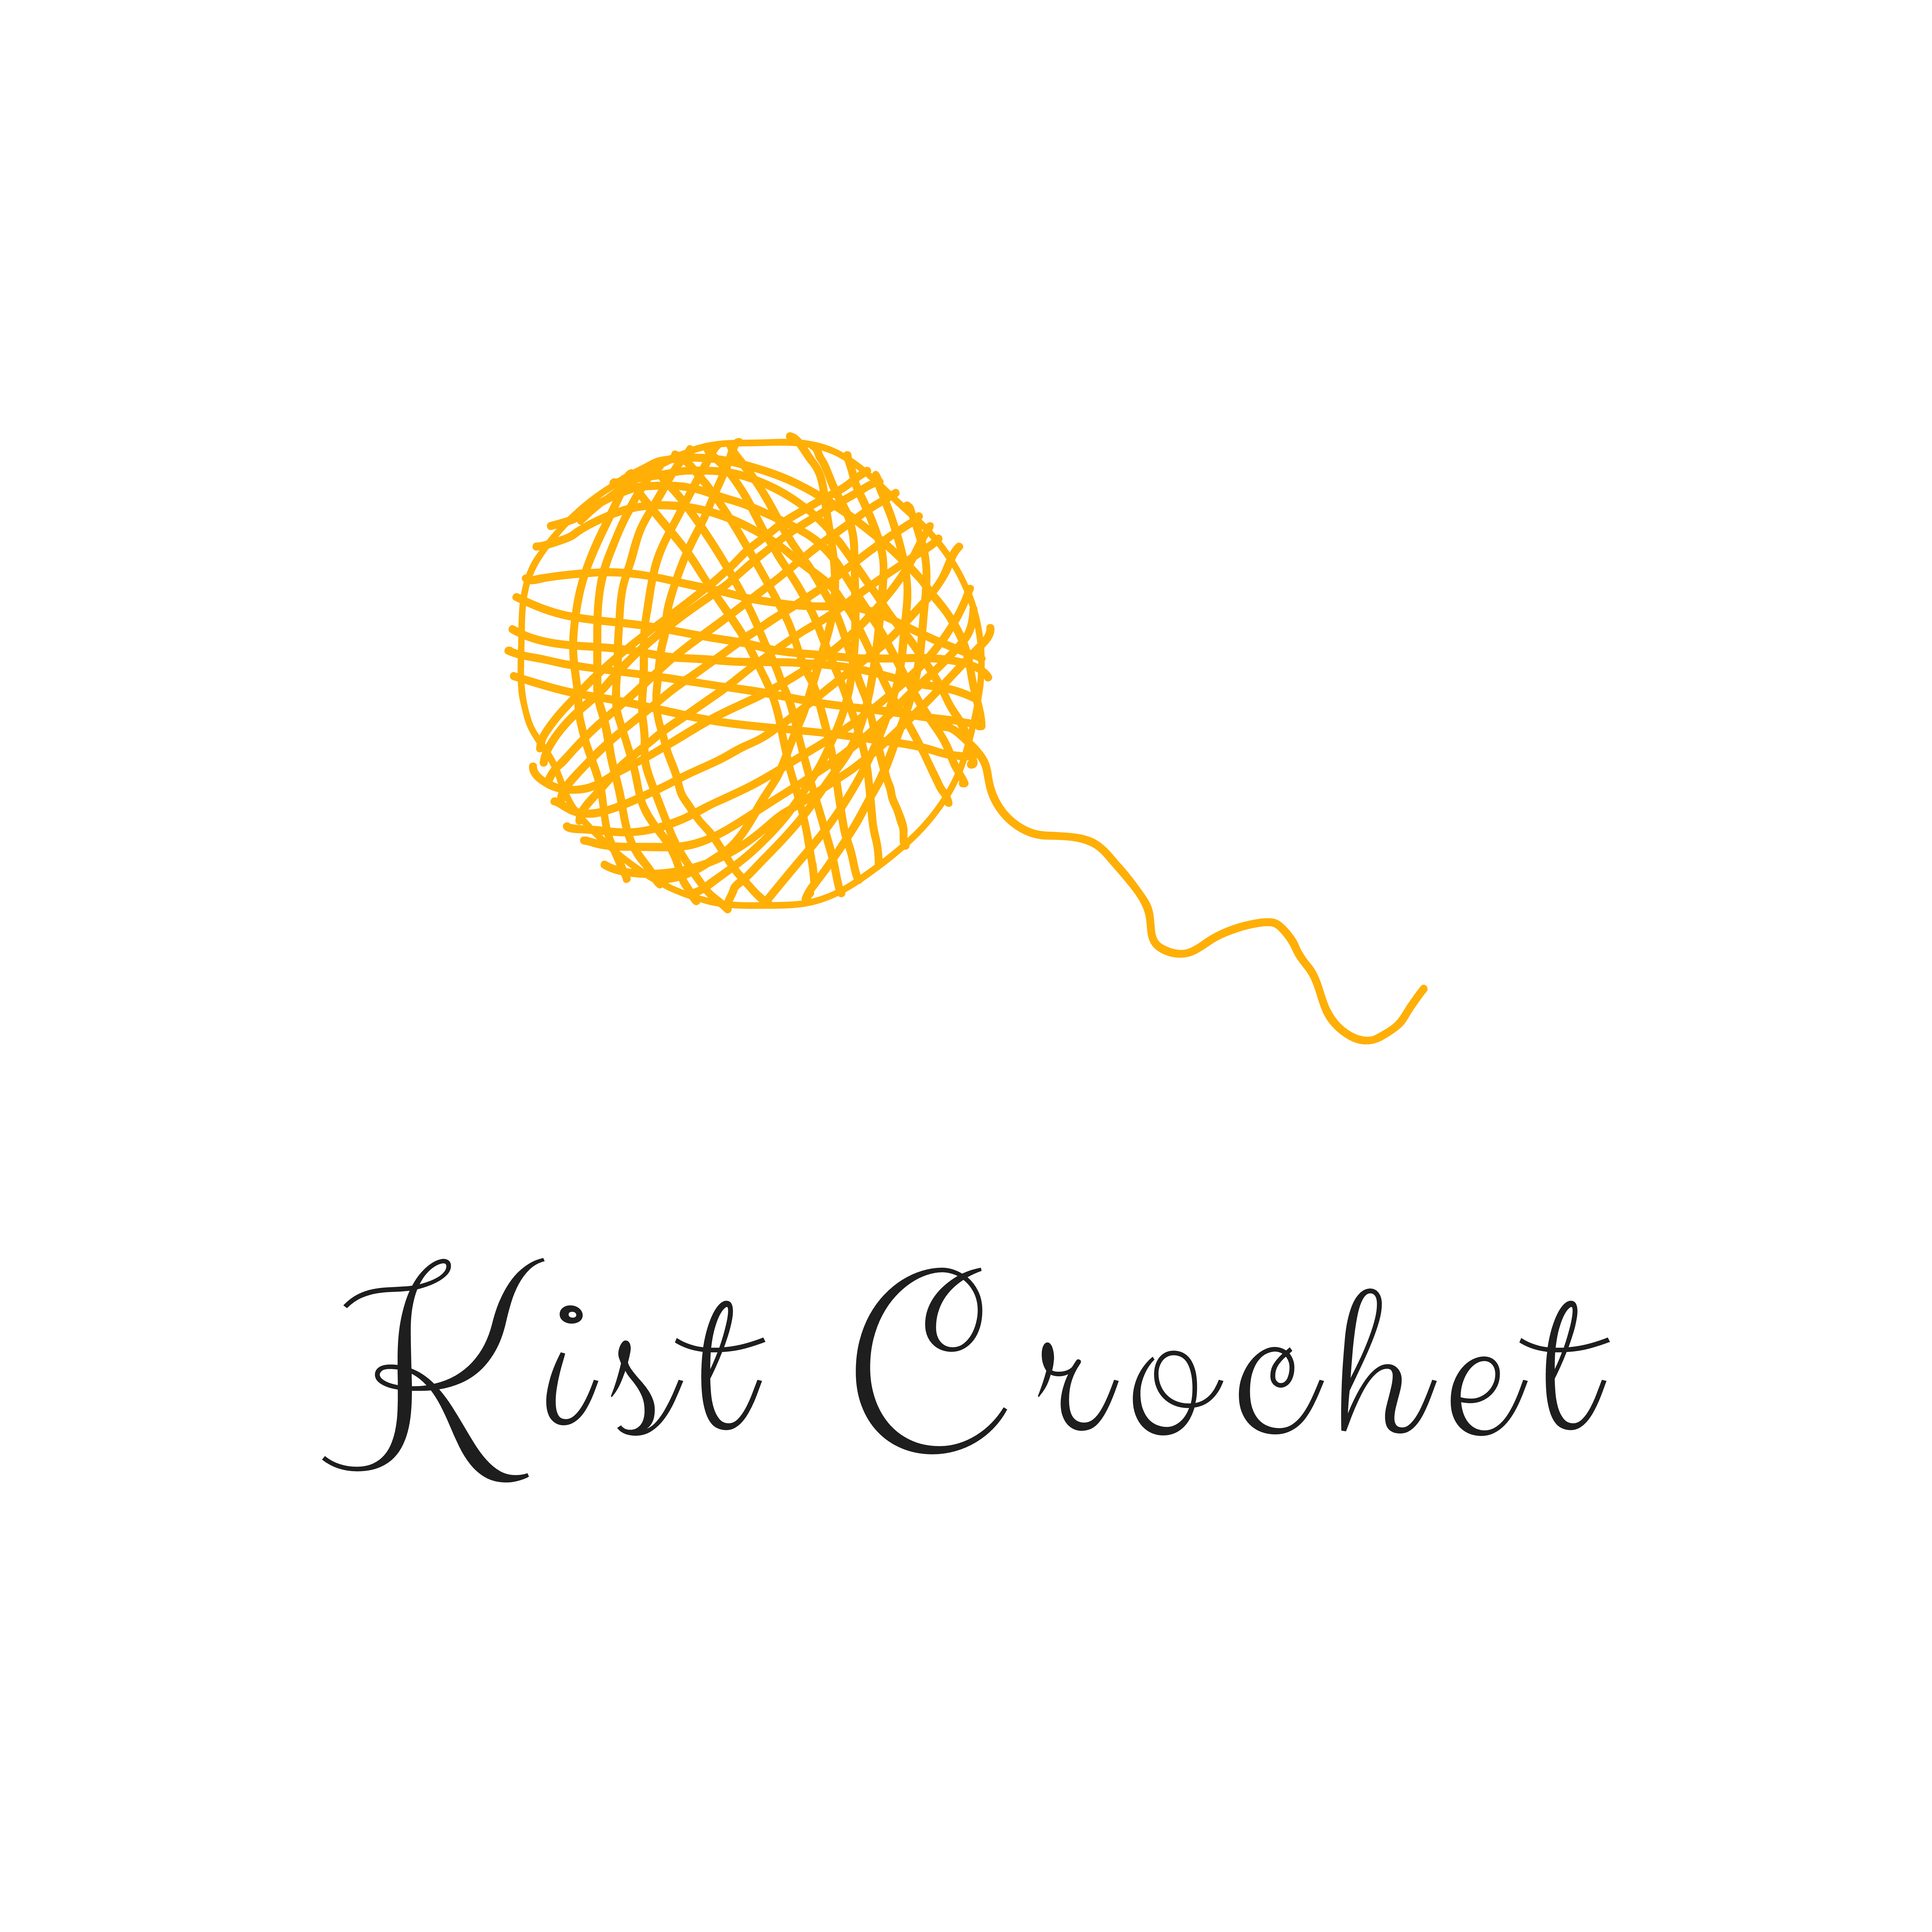 Kist Crochet